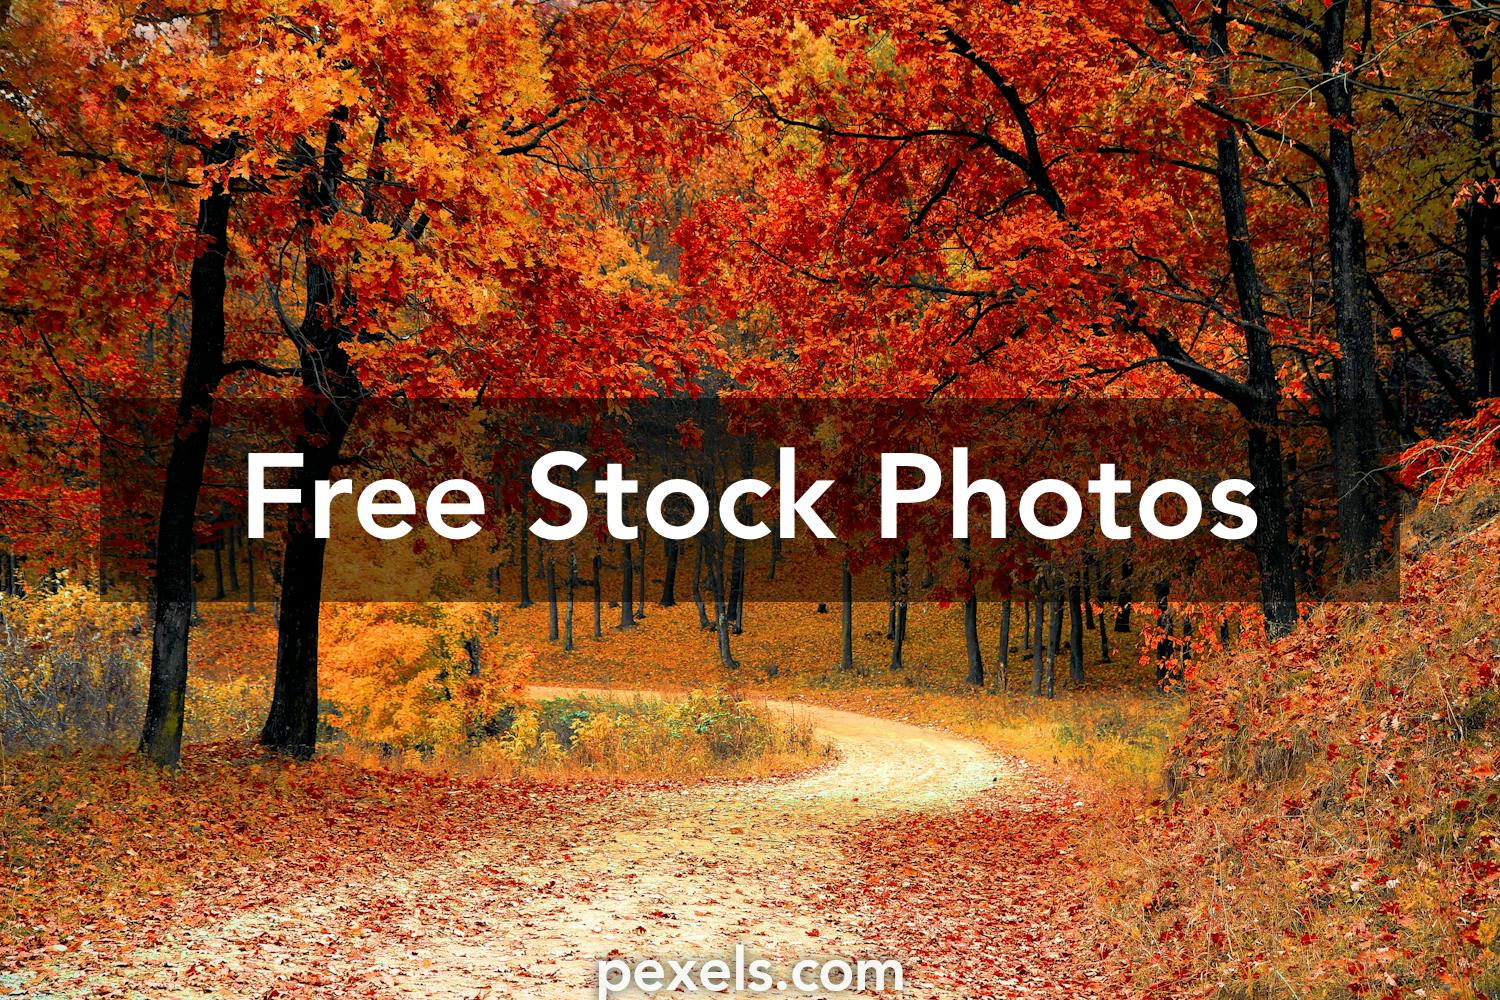 10 000 Best Autumn Wallpaper Photos 100 Free Download Pexels Stock Photos